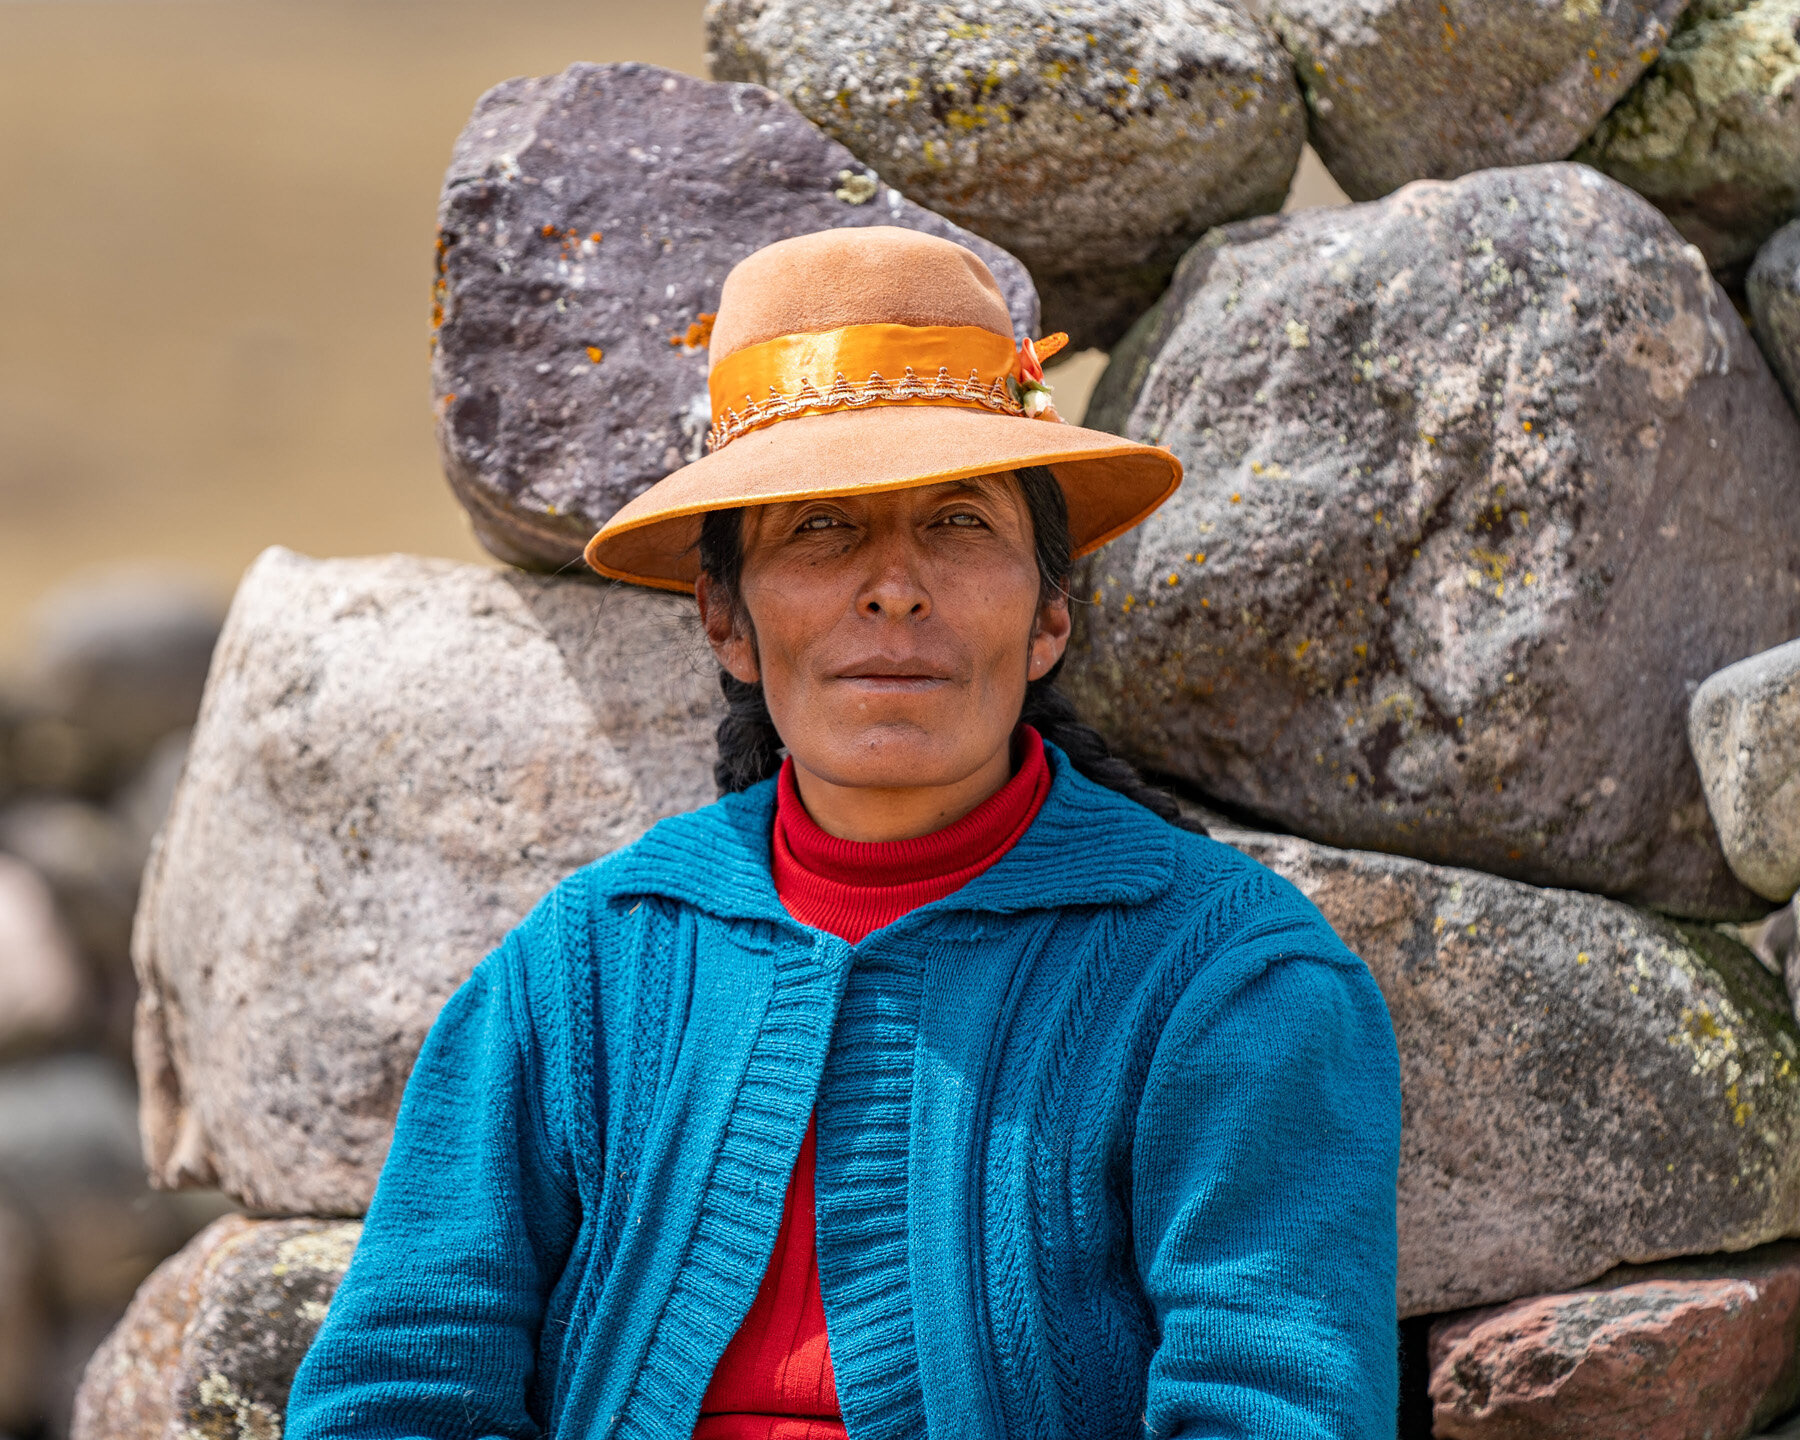 202_Wasim Muklashy Photography_Andes Mountains_Peru_Quechua Benefit_Picotani_Spar_Macusani_Alpaca.jpg